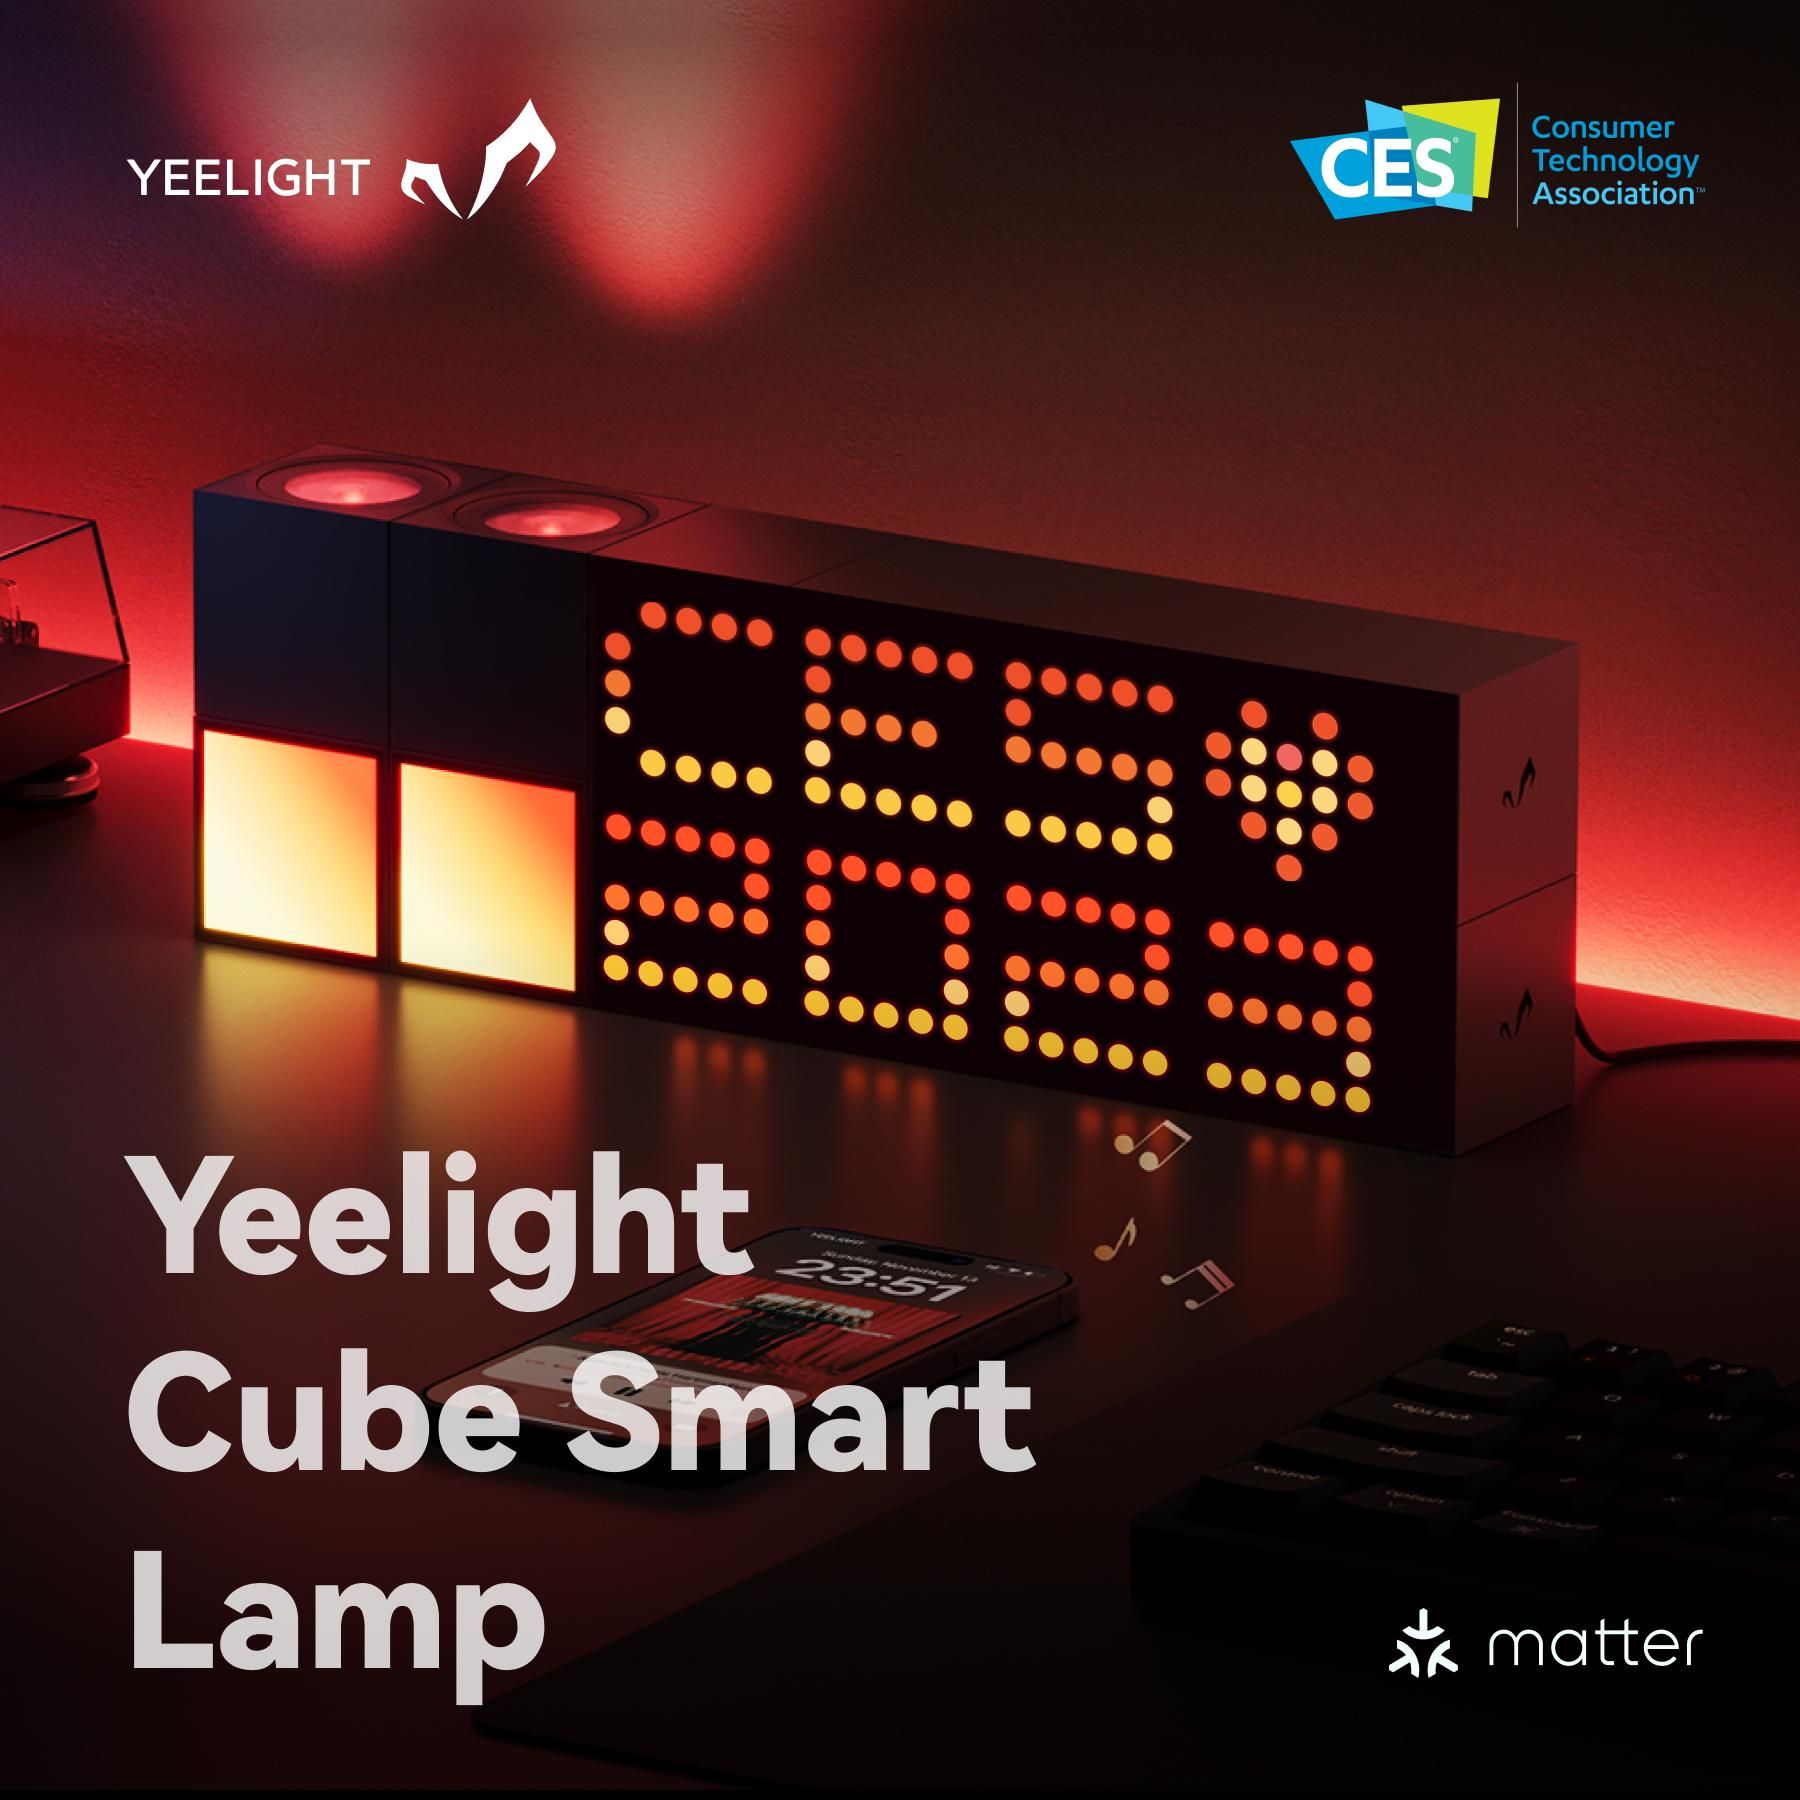 Yeelight launches Matter Compatibility Smart Lighting - Gearbrain